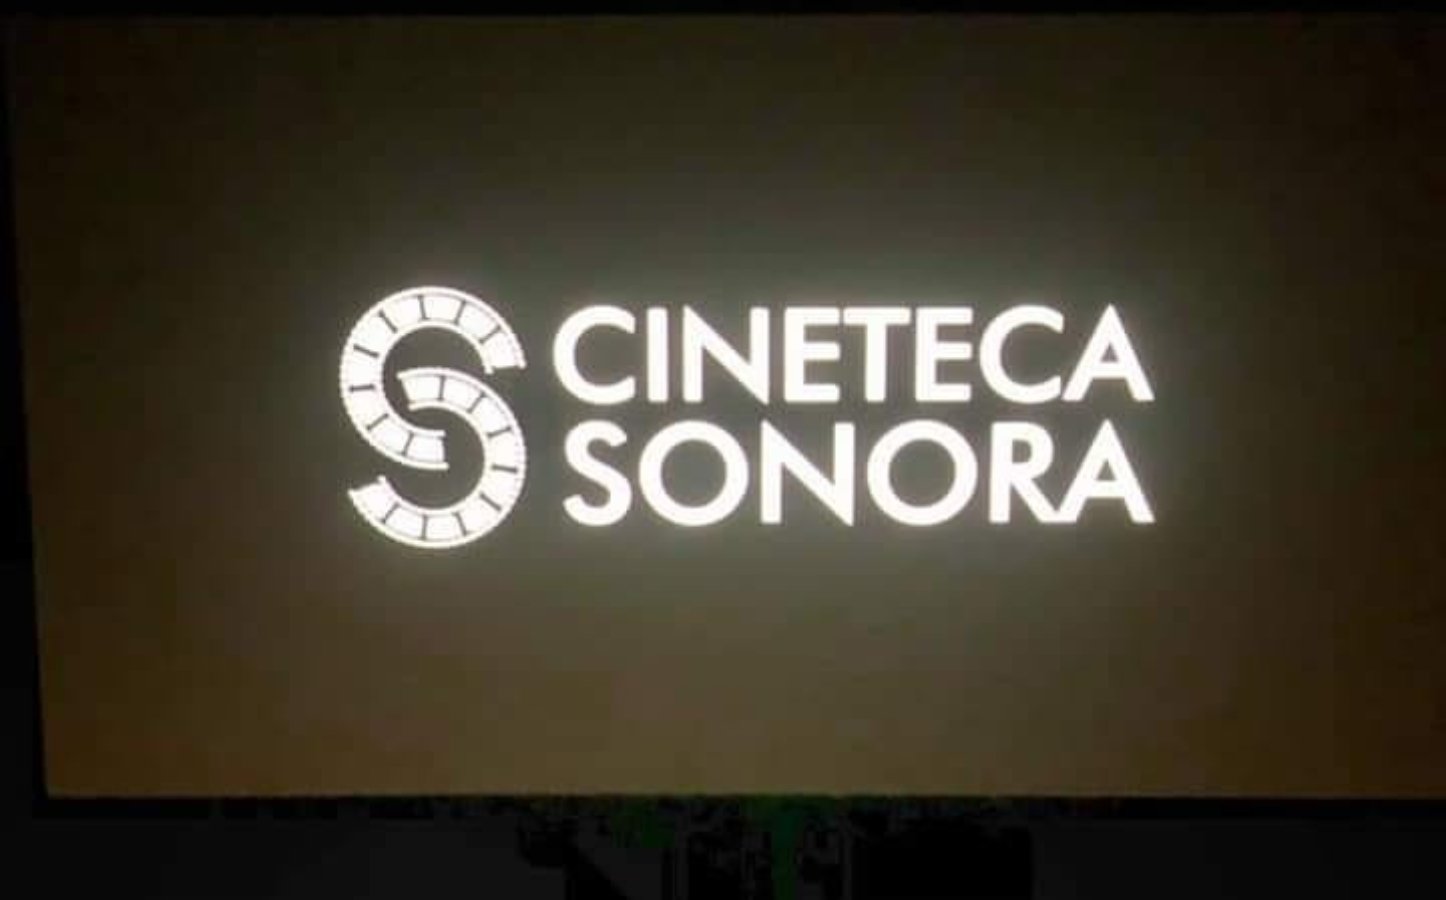 Cineteca Sonora